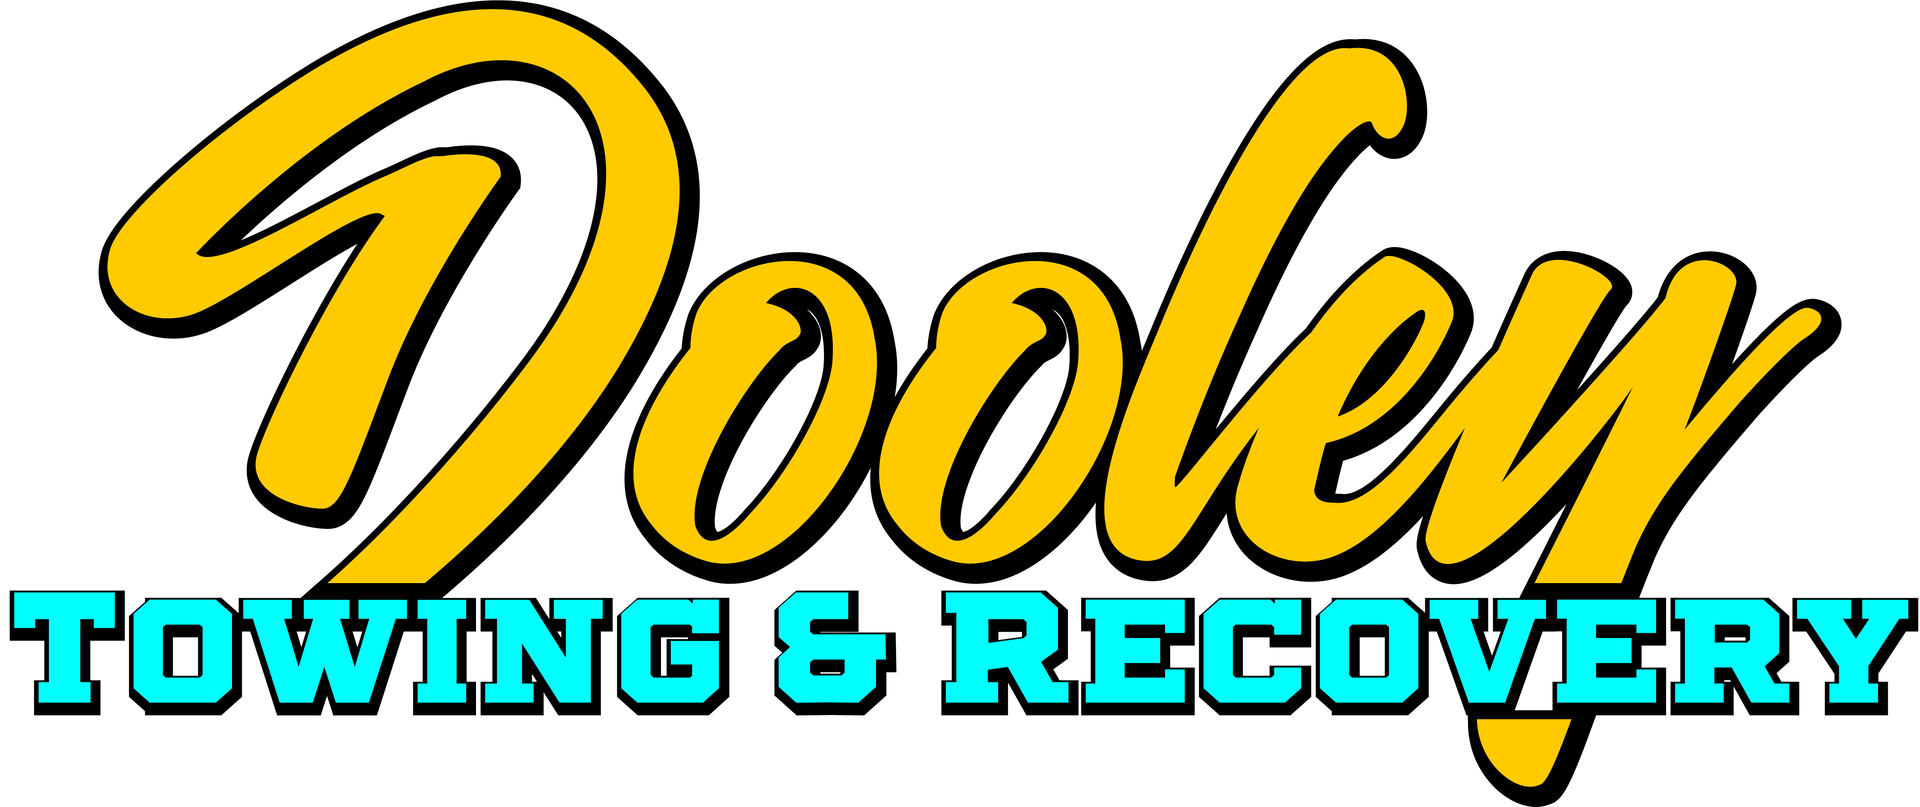 Dooley Towing, a Charleston towing company